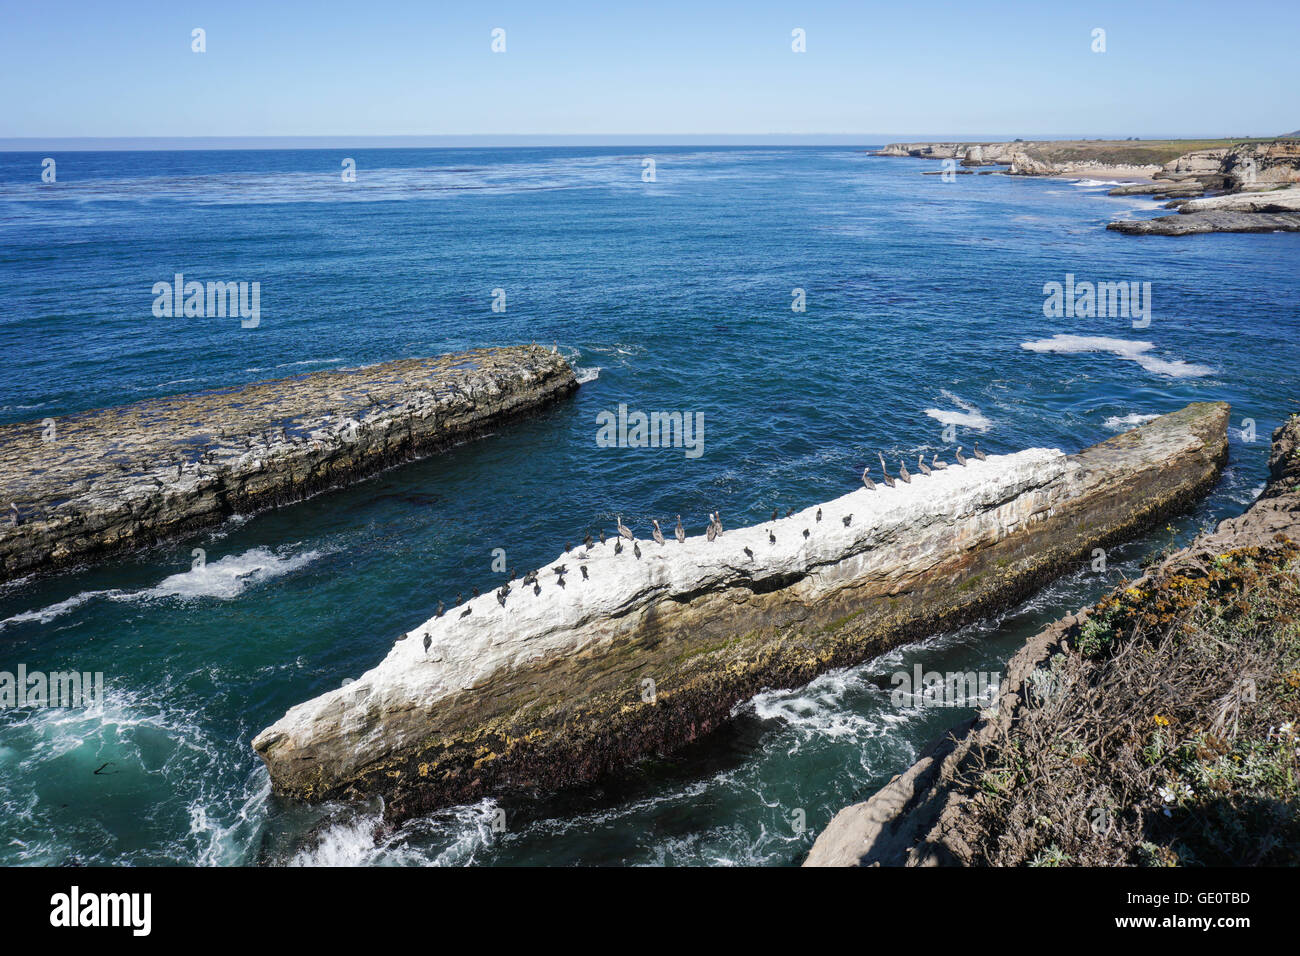 Brown pelicans and Cormorants resting on a rock, Pacific Ocean coastline, California Stock Photo